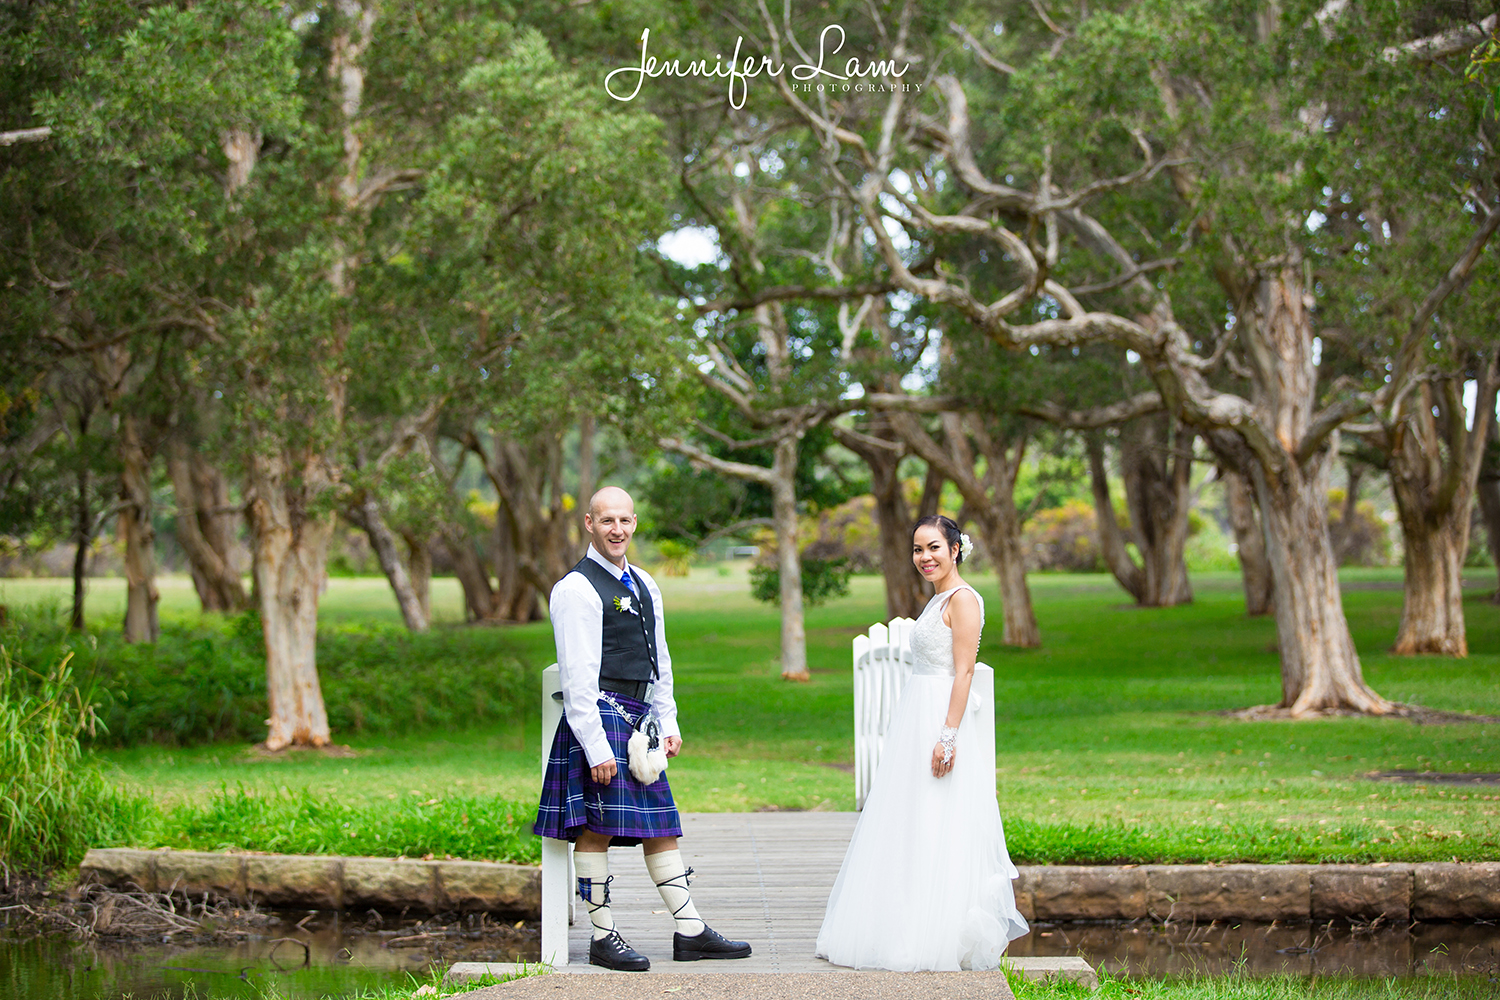 Sydney Wedding Photographer - Jennifer Lam Photography (100).jpg